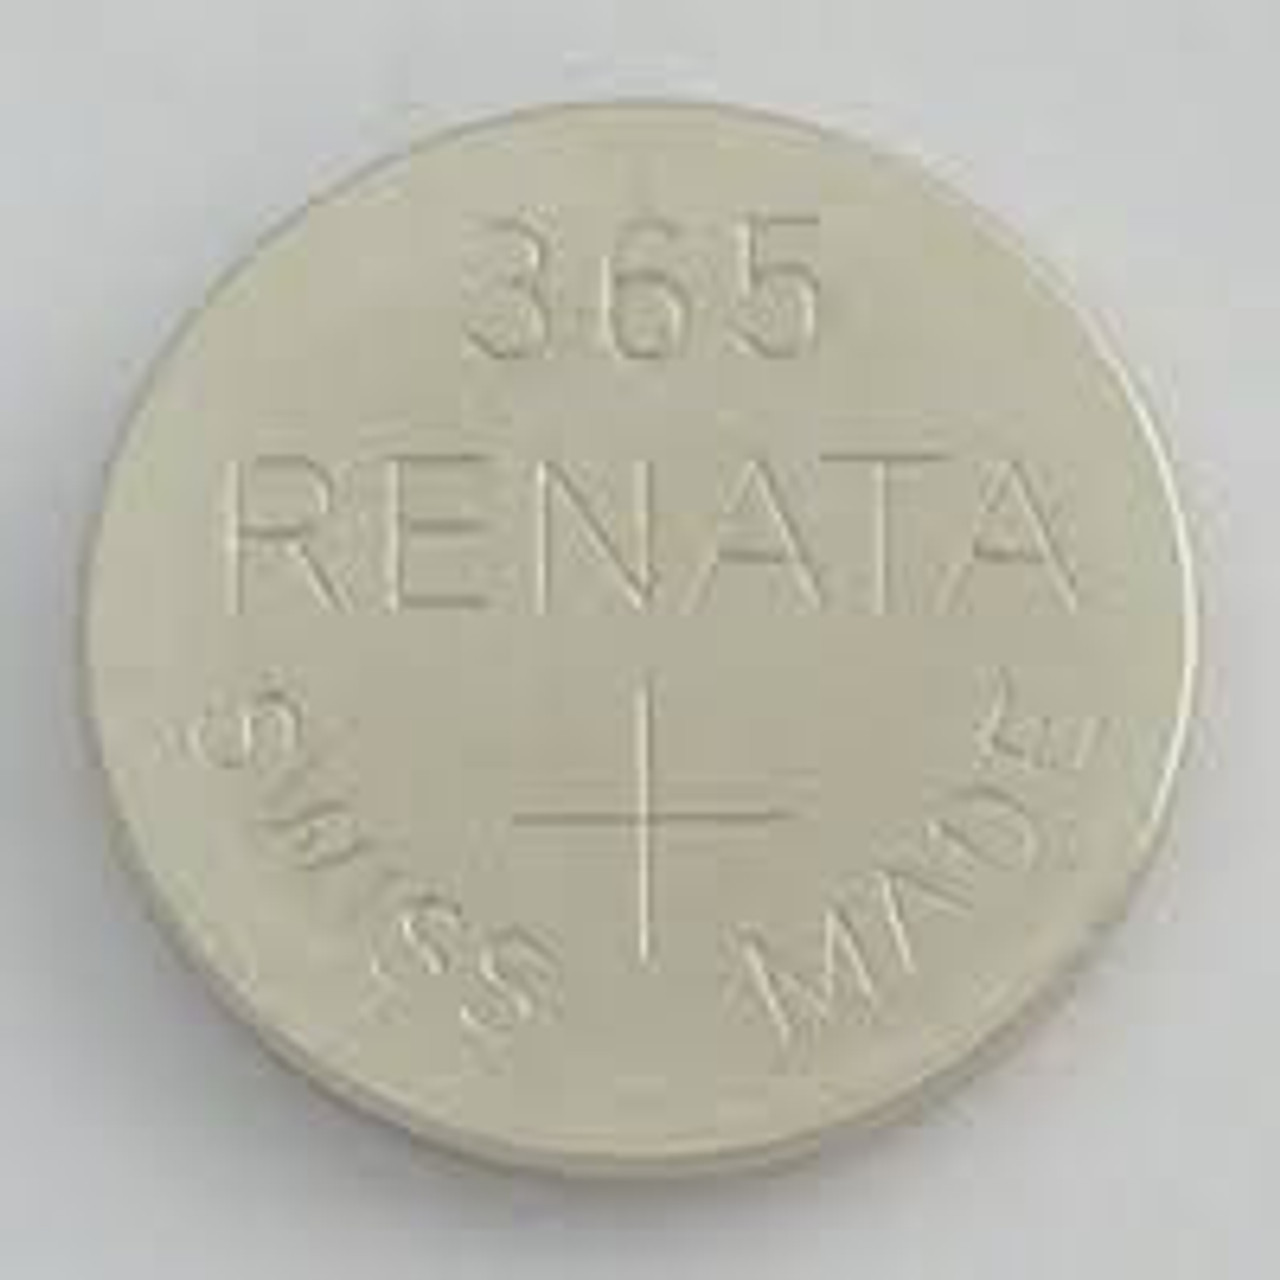 Renata 365/366 - SR1116 Silver Oxide Button Battery 1.55V 25 Pack FREE SHIPPING